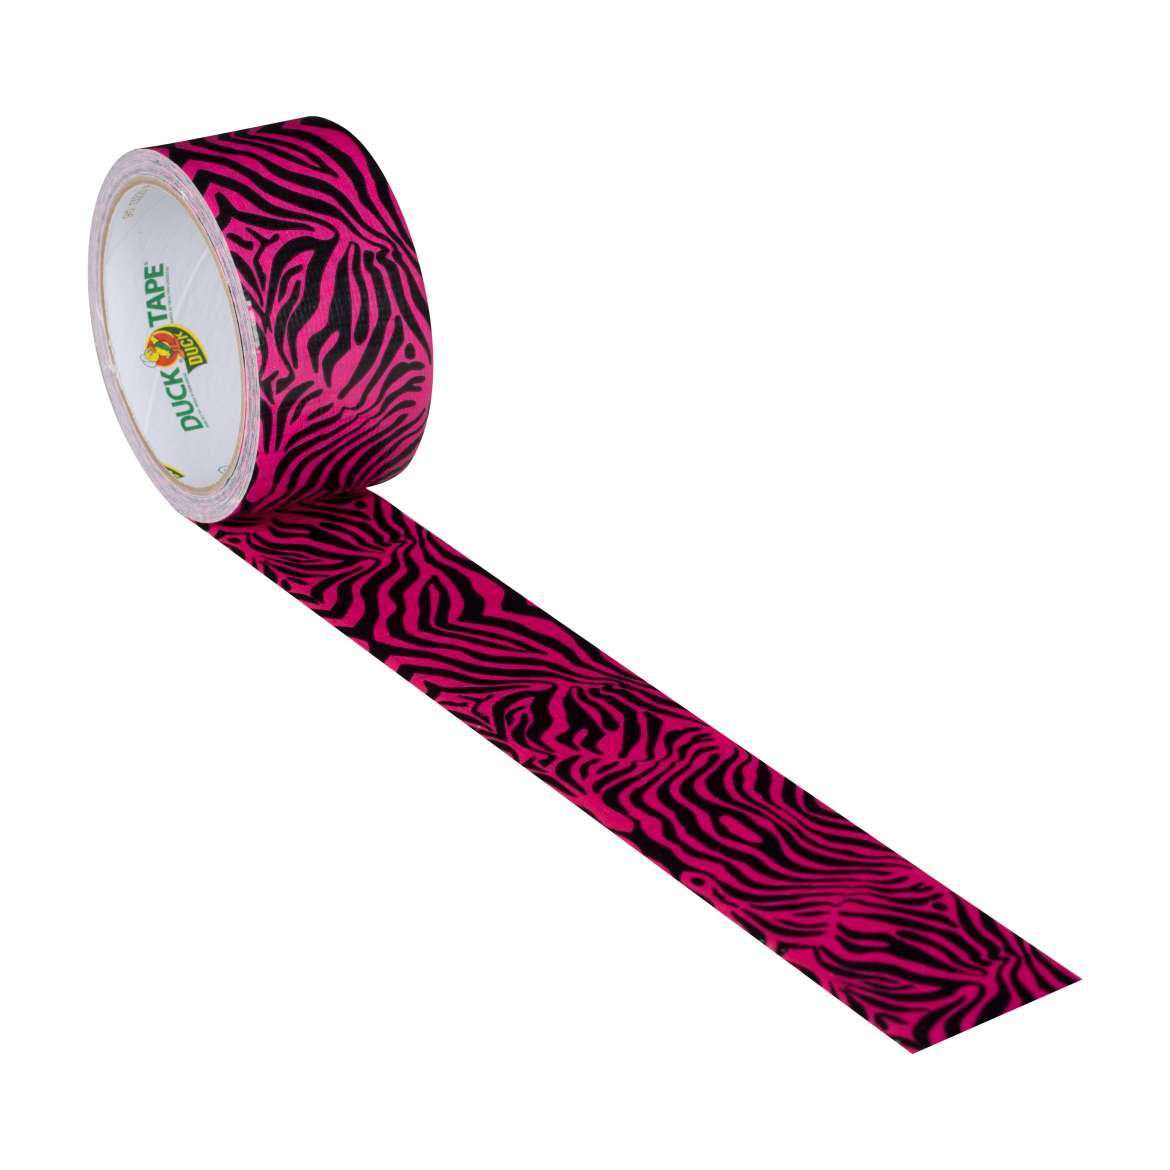 Shurtech Brands 280320 1.88 In. x 10 Yards. Pink Zebra Tape - image 3 of 4